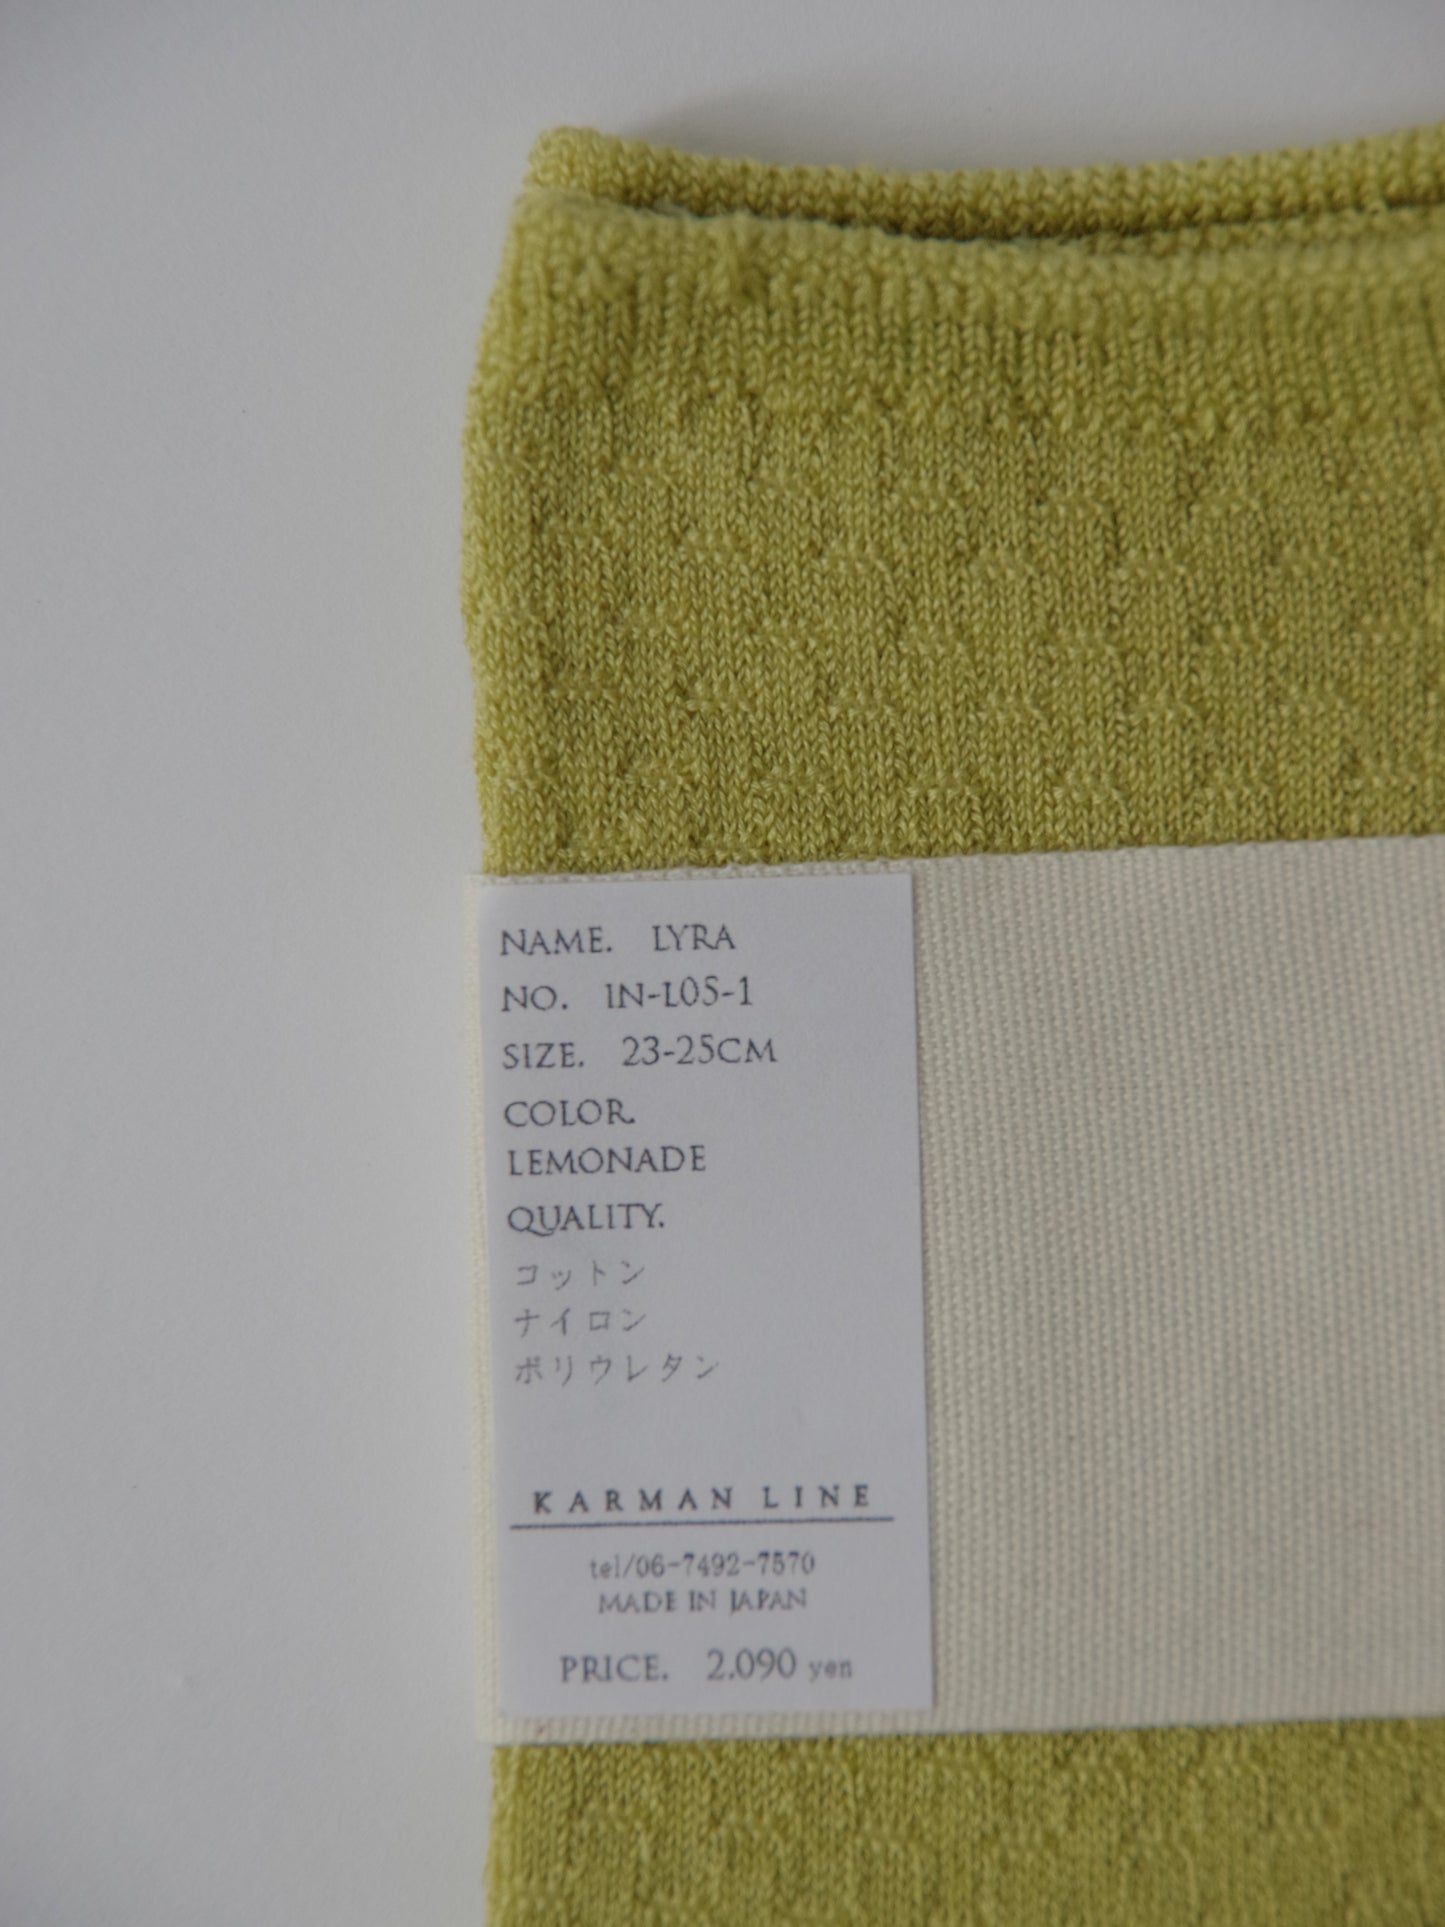 LYRA / cotton |KARMAN LINE